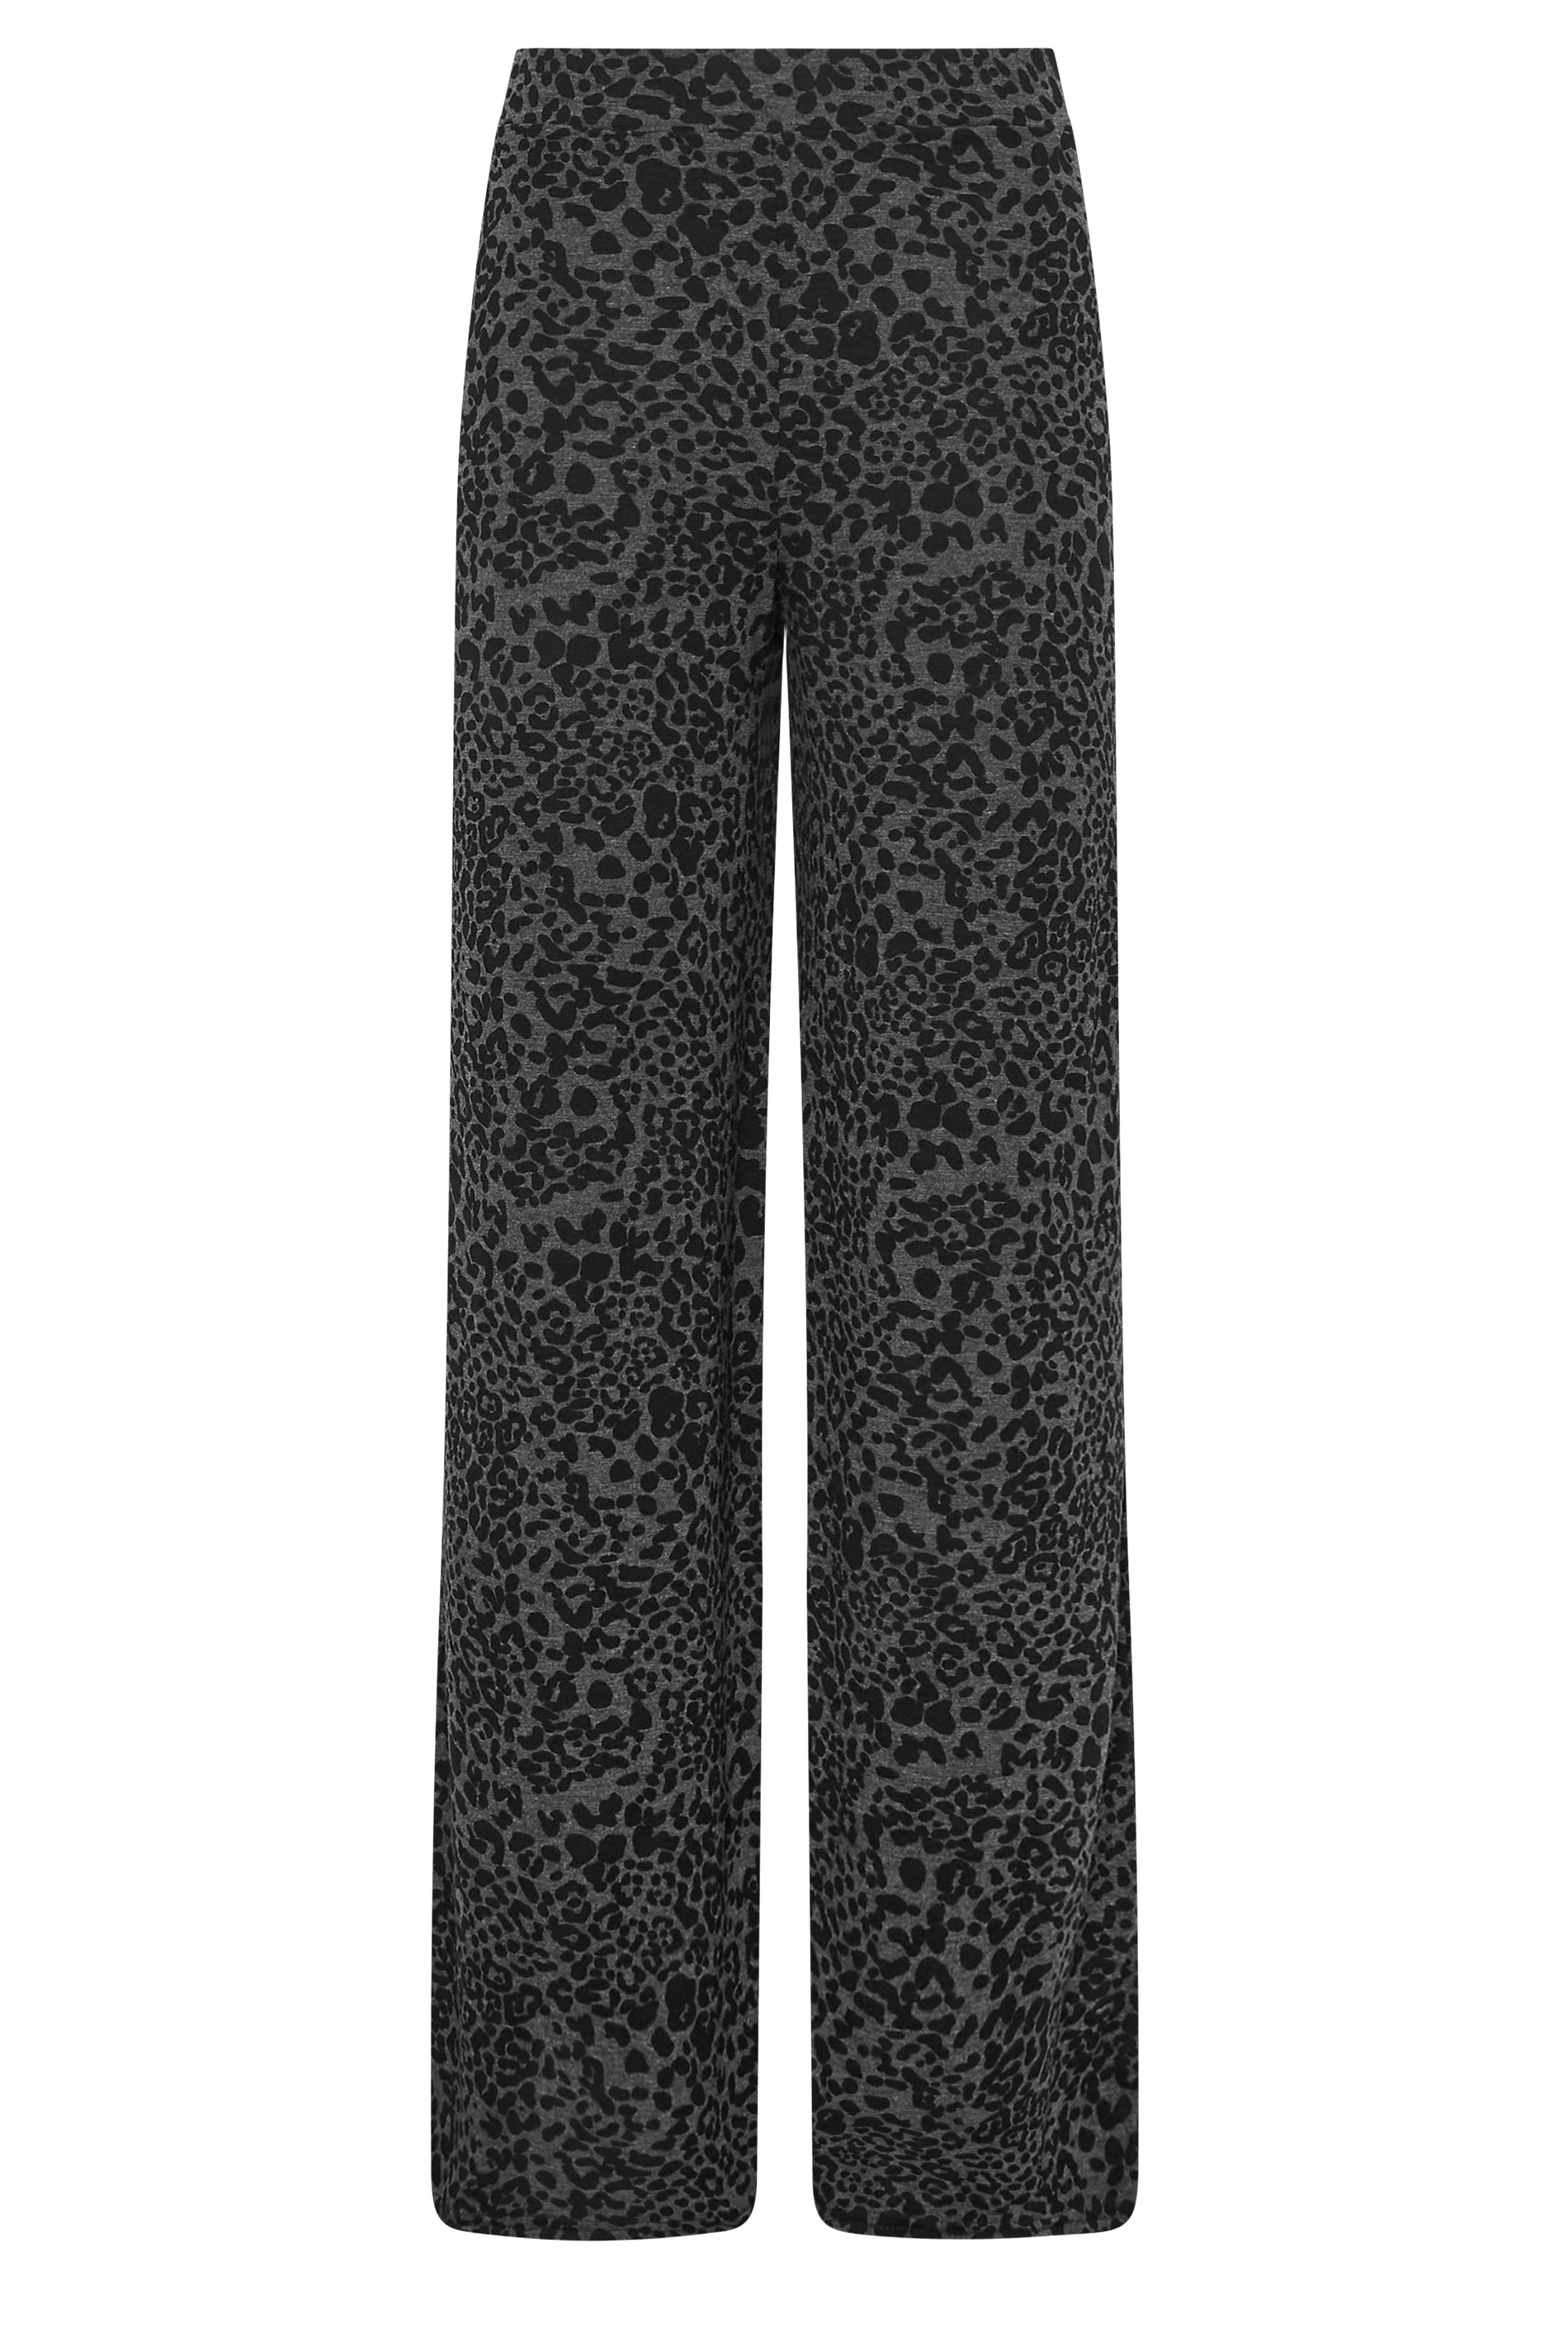 LTS Tall Charcoal Grey Leopard Print Wide Leg Trousers | Long Tall Sally 3